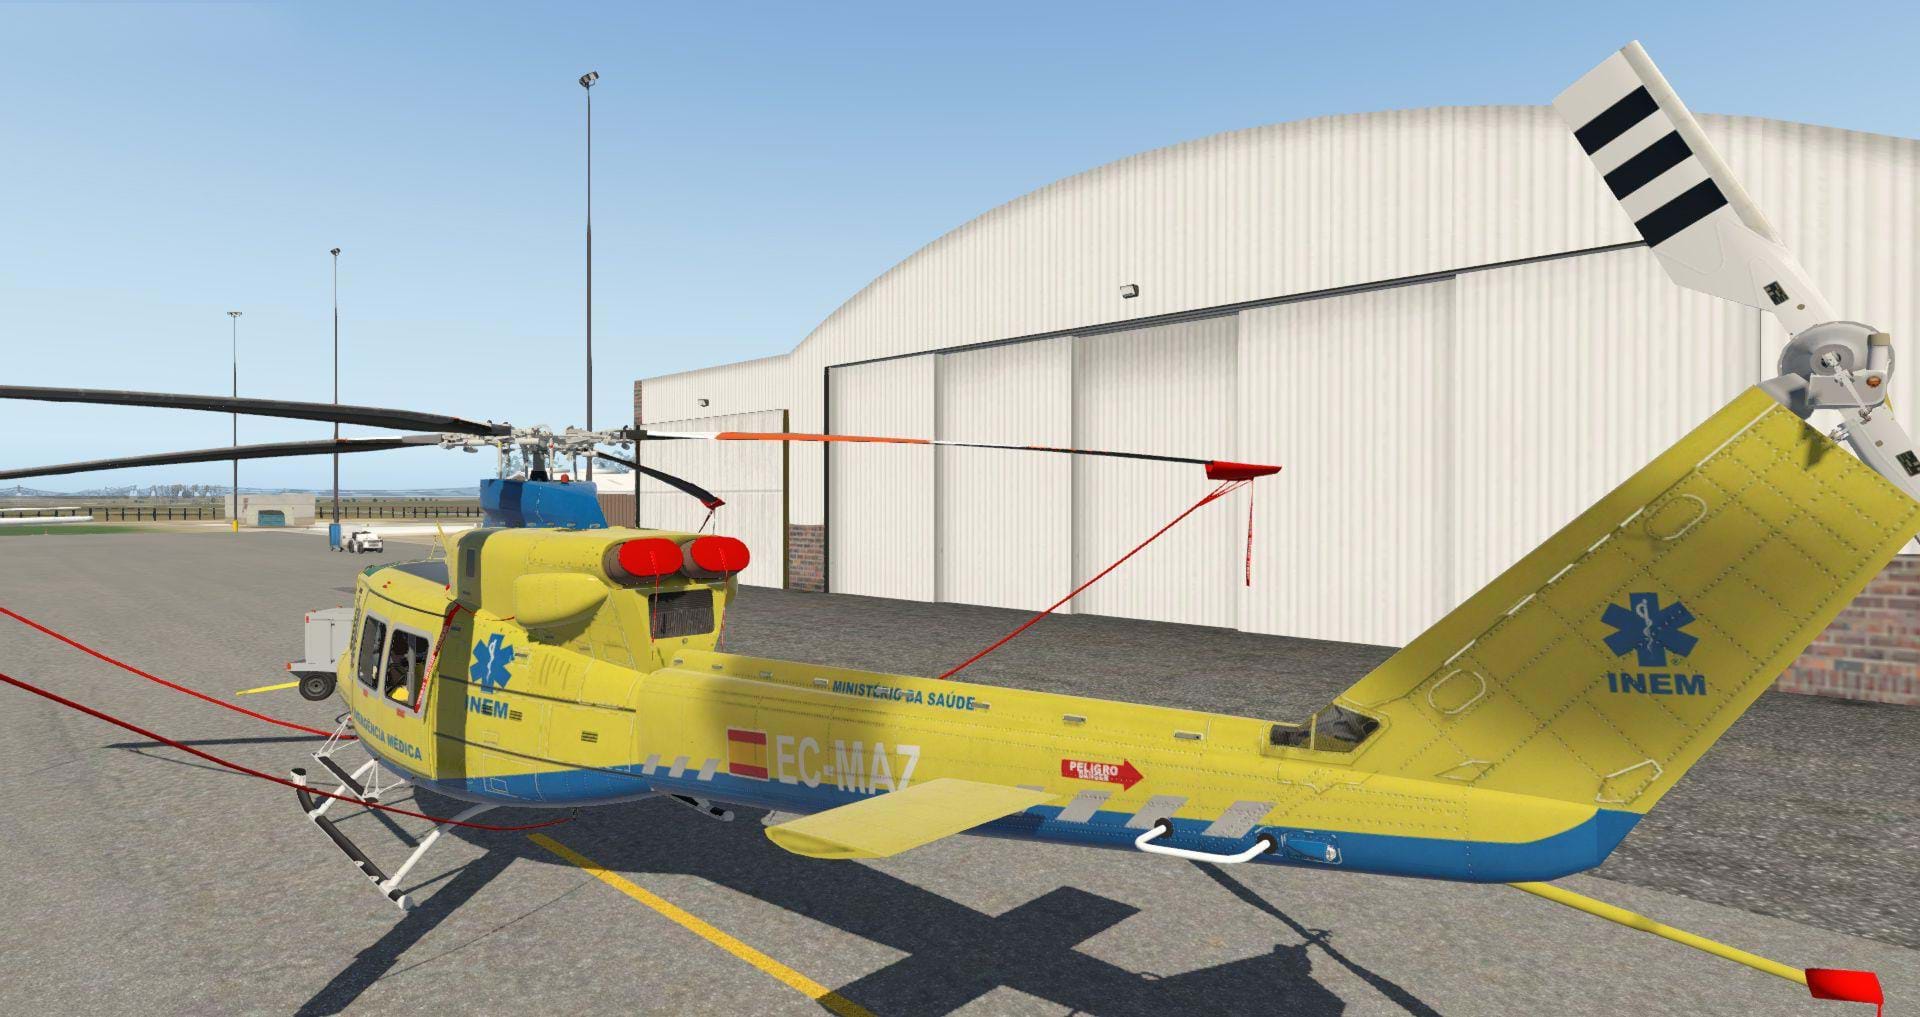 X-Trident Bell 412 - EC-MAZ INEM livery